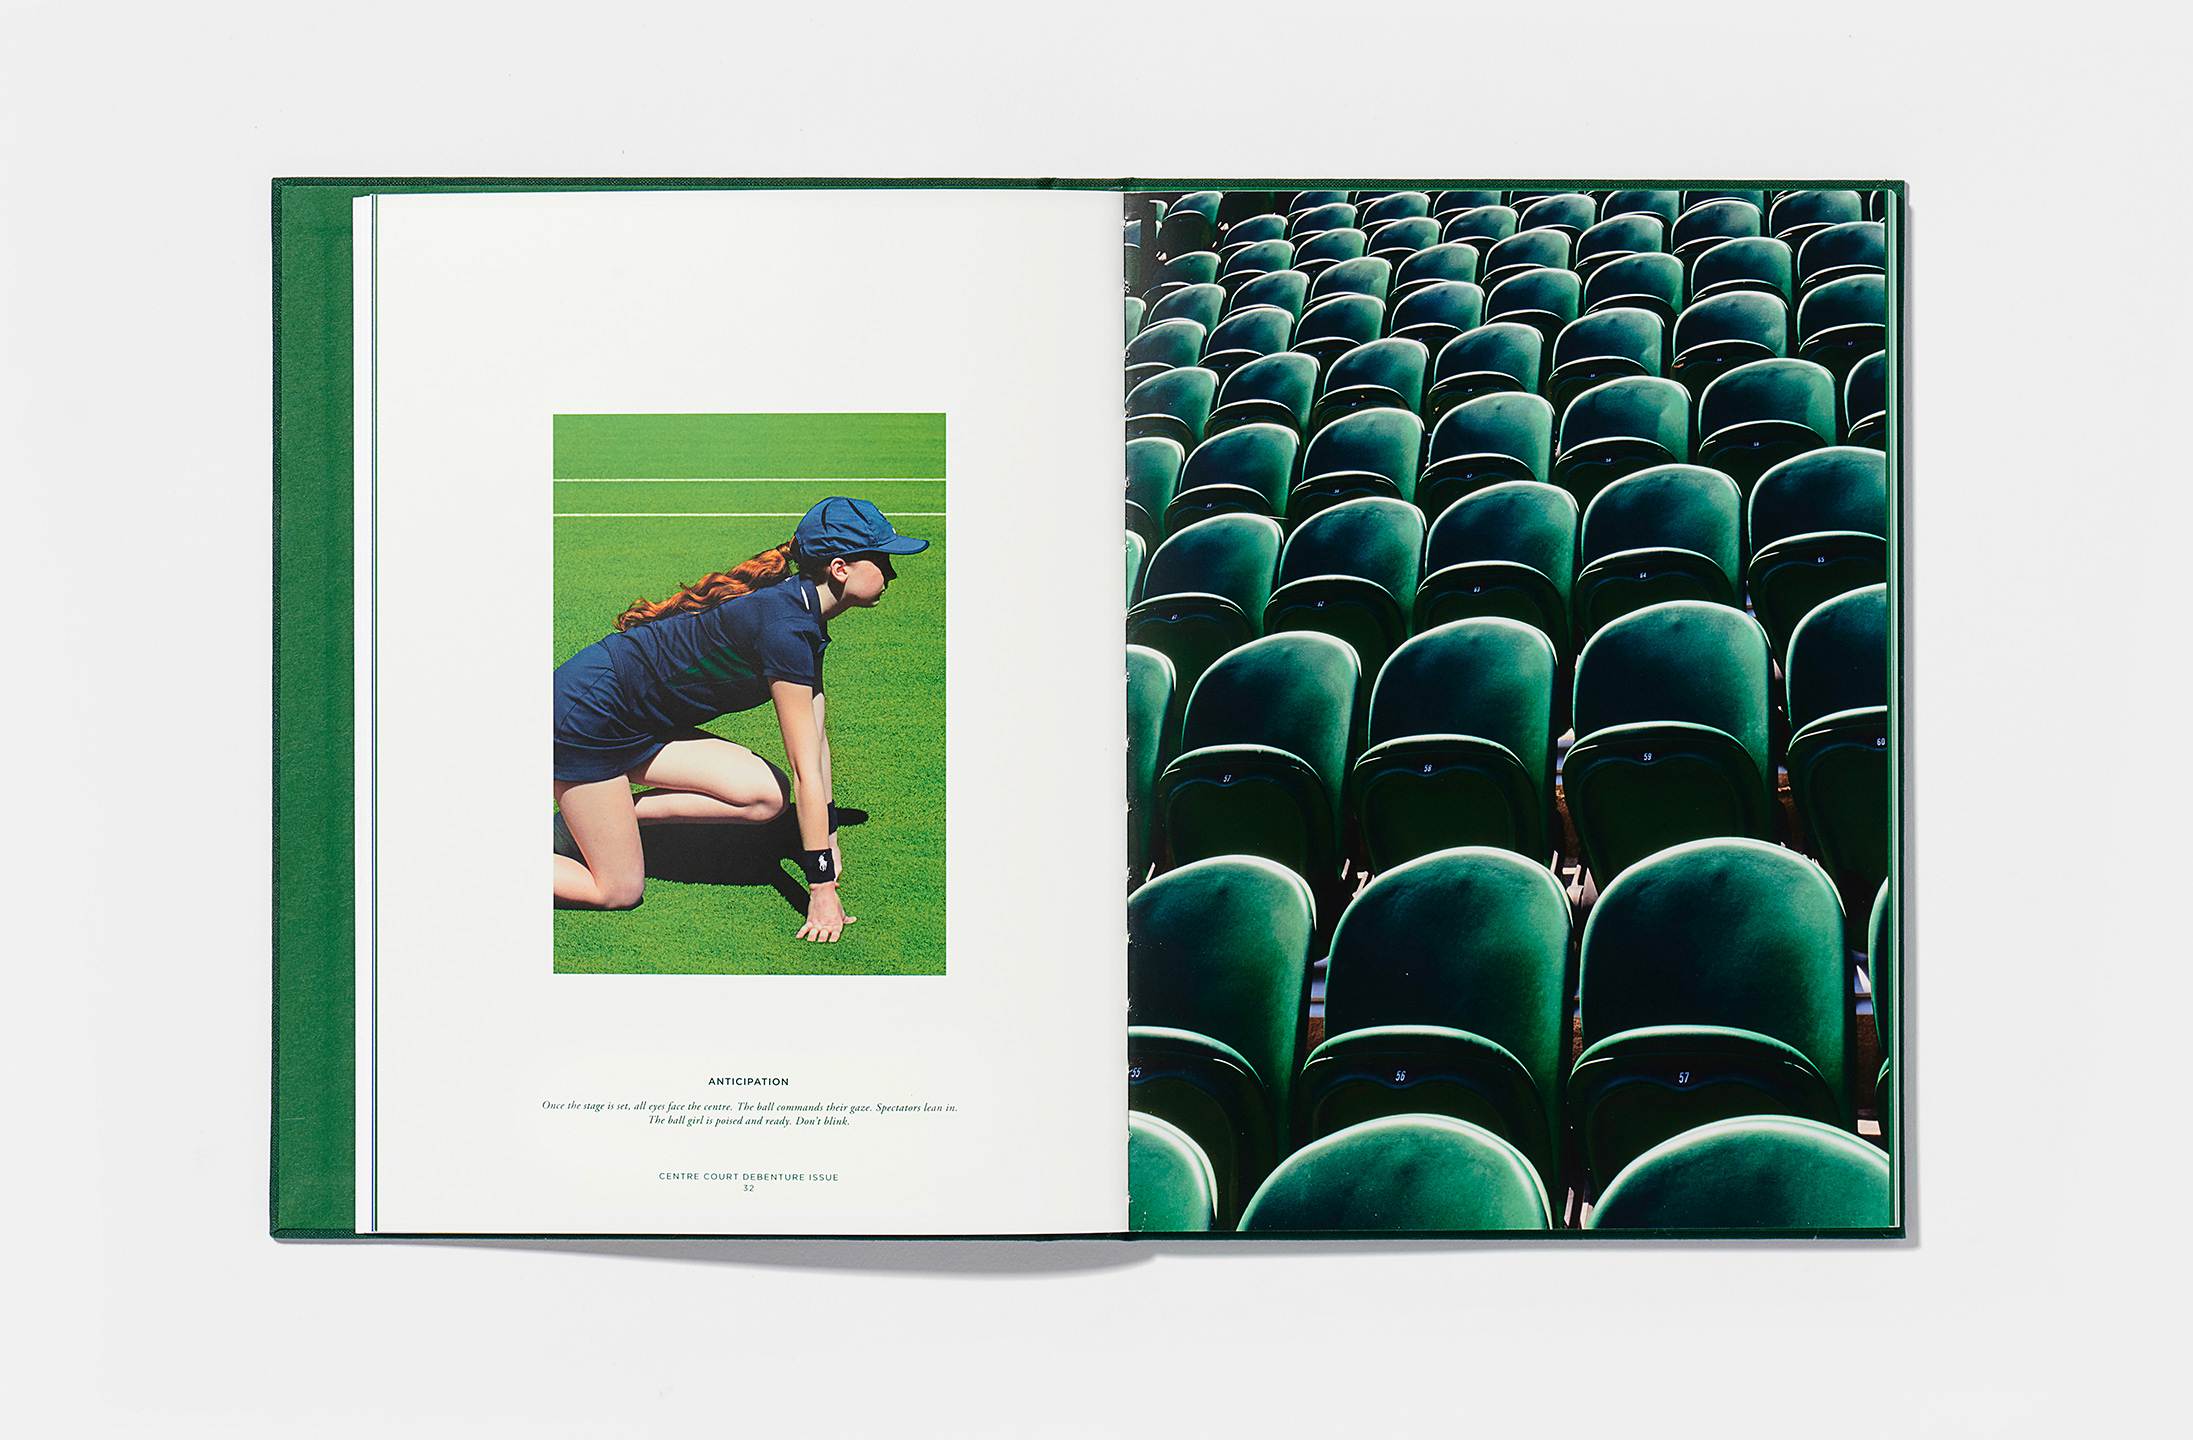 Art direction and book design for Wimbledon Centre Court, (2019)